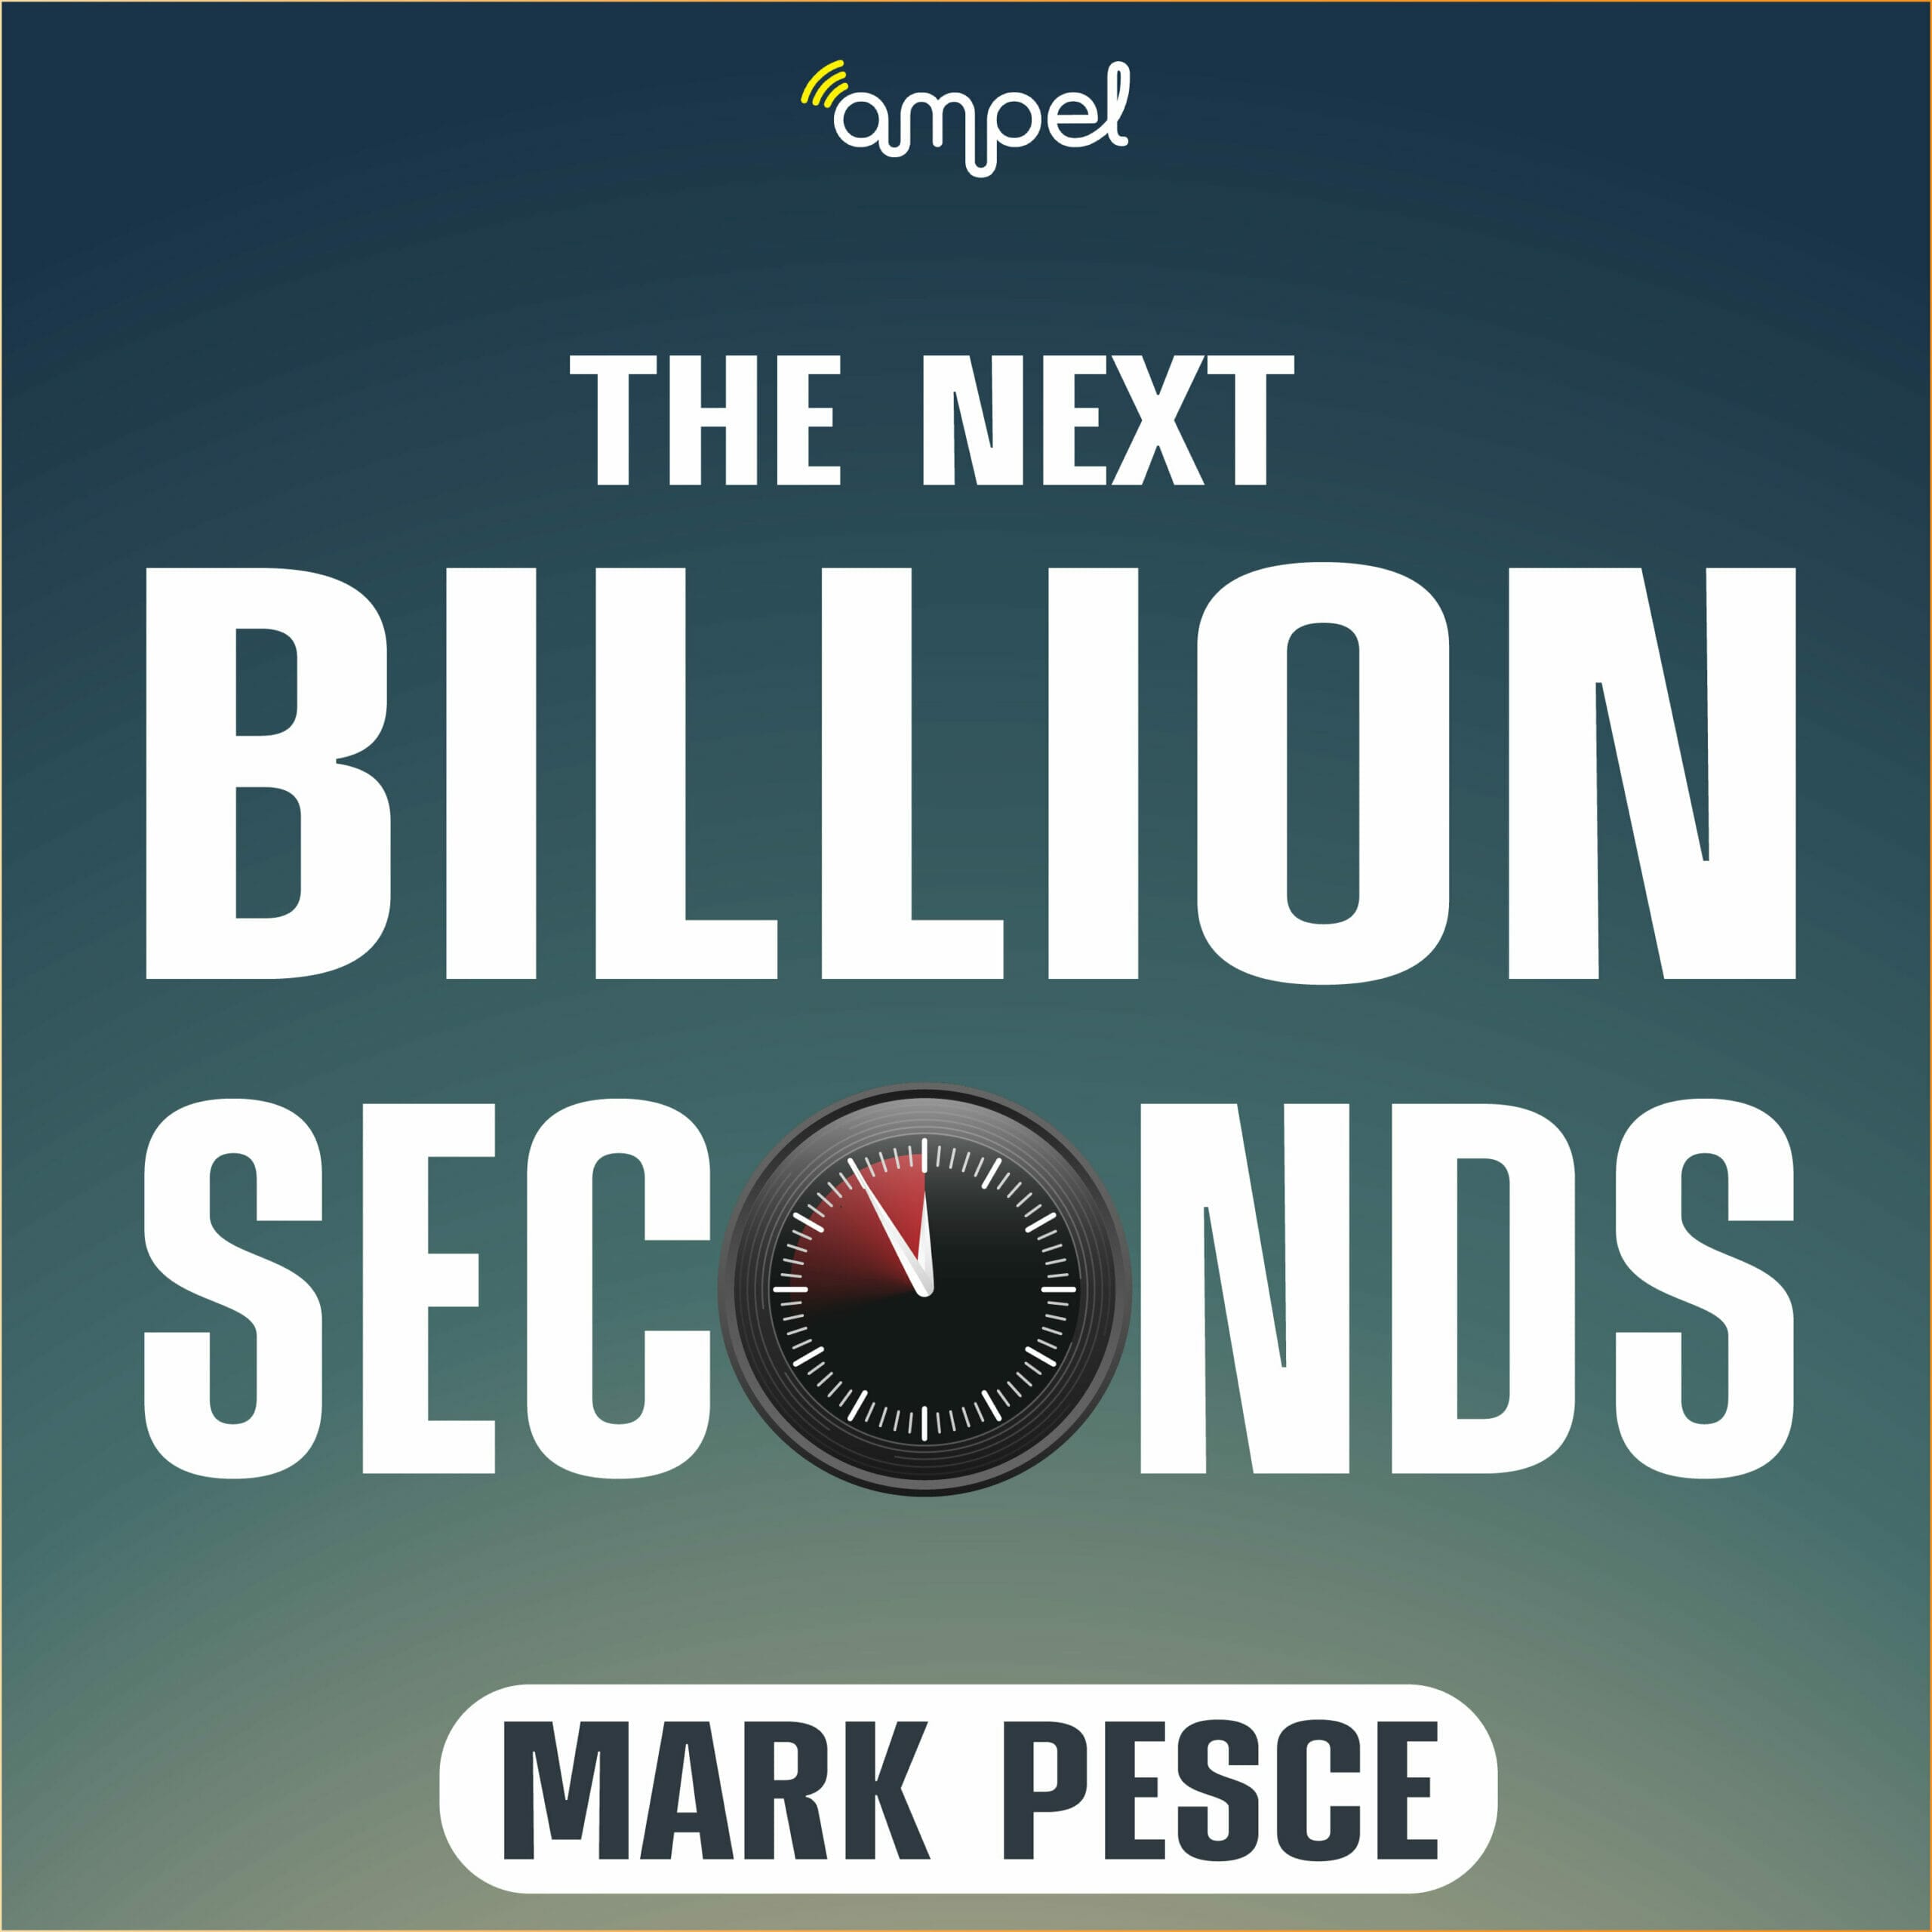 The Next Billion Seconds Logo